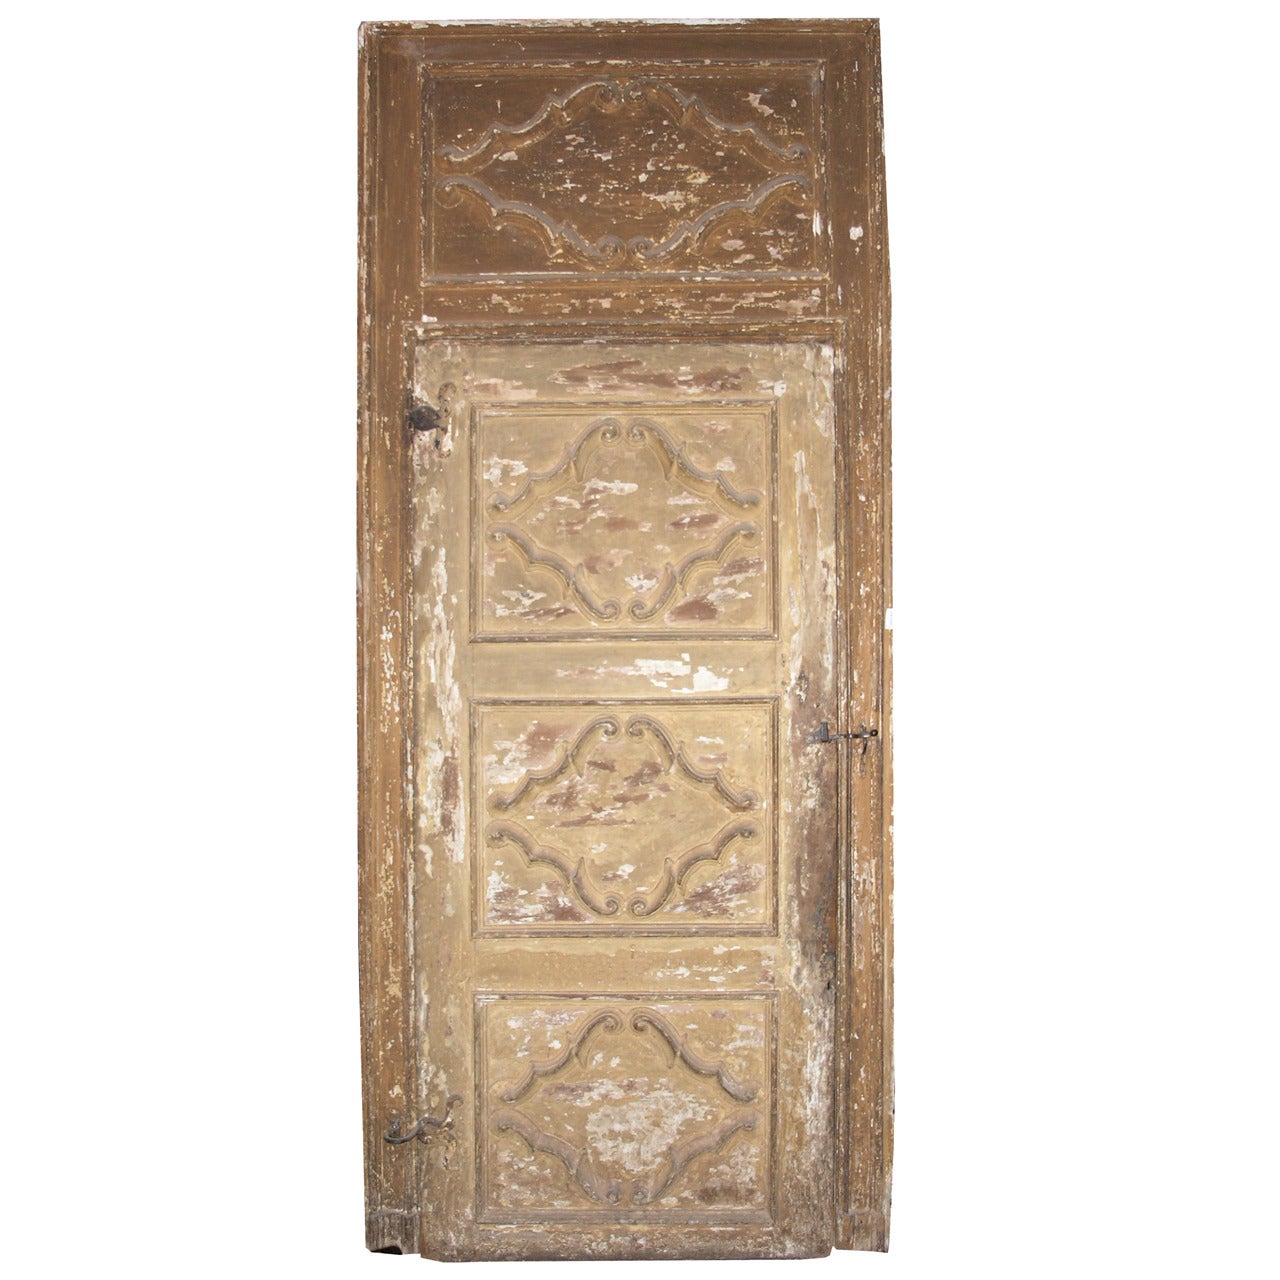 Antique Lacquered Door, Made of Poplar